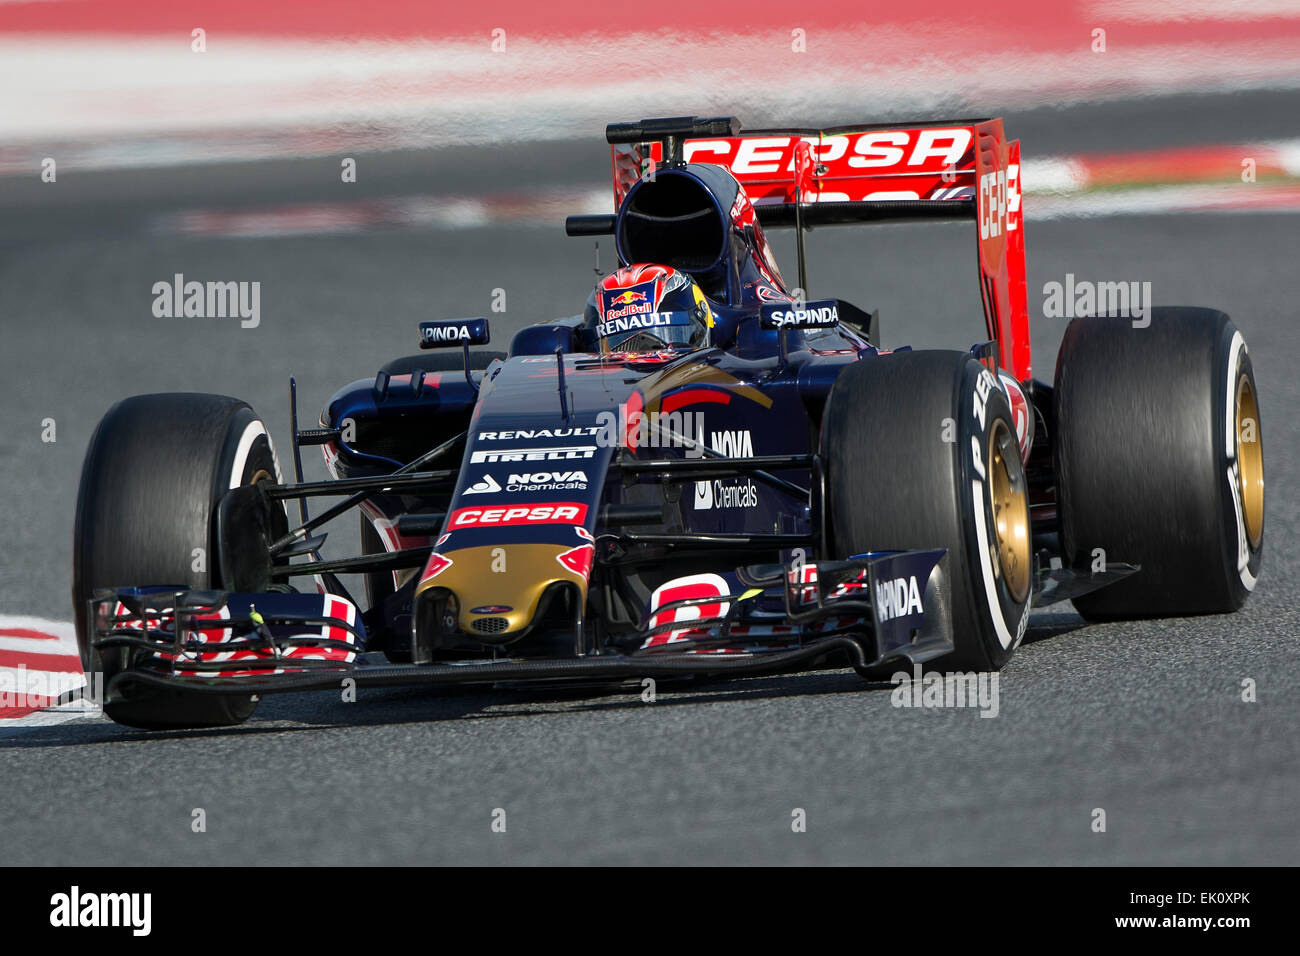 Driver Daniil Kvyat. Team Red Bull. Formula One Test Days at Circuit de Catalunya. Montmelo, Spain. February 27, 2015 Stock Photo